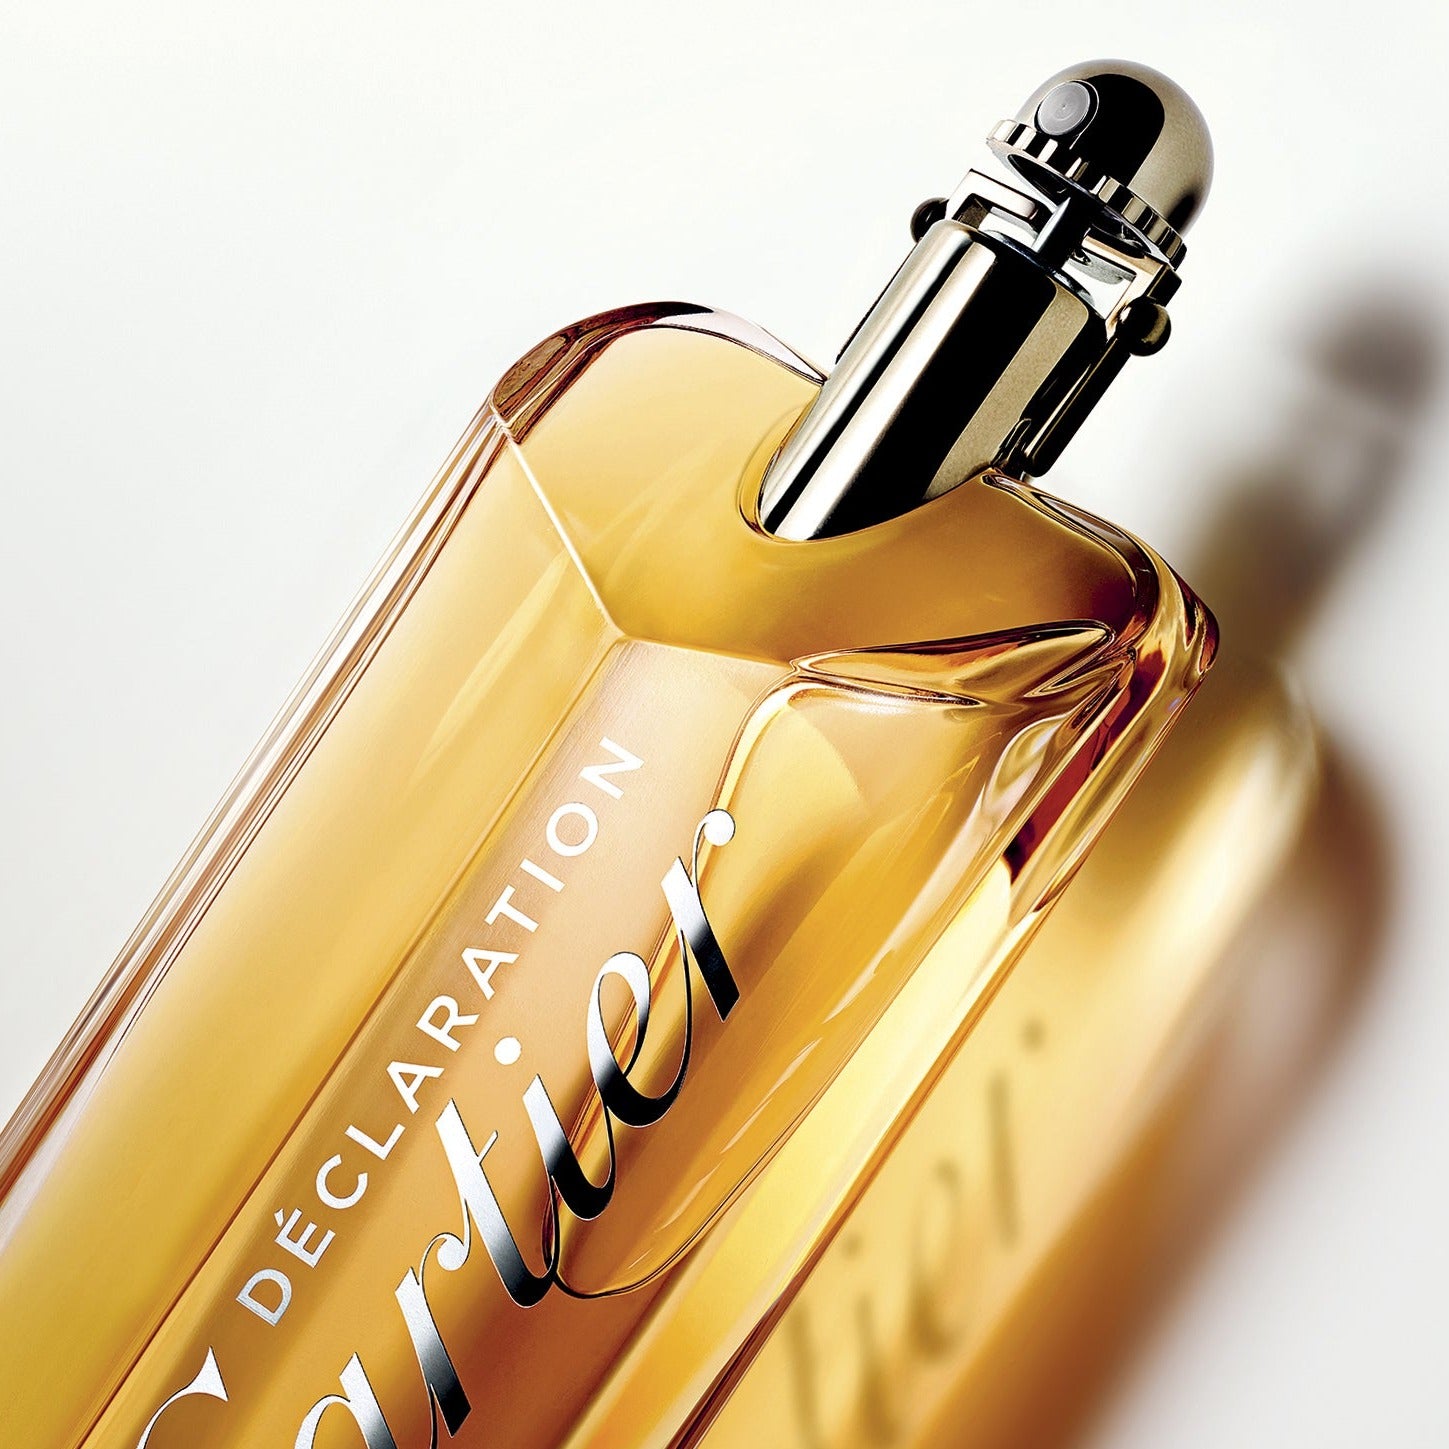 Cartier Declaration For Men - Parfum